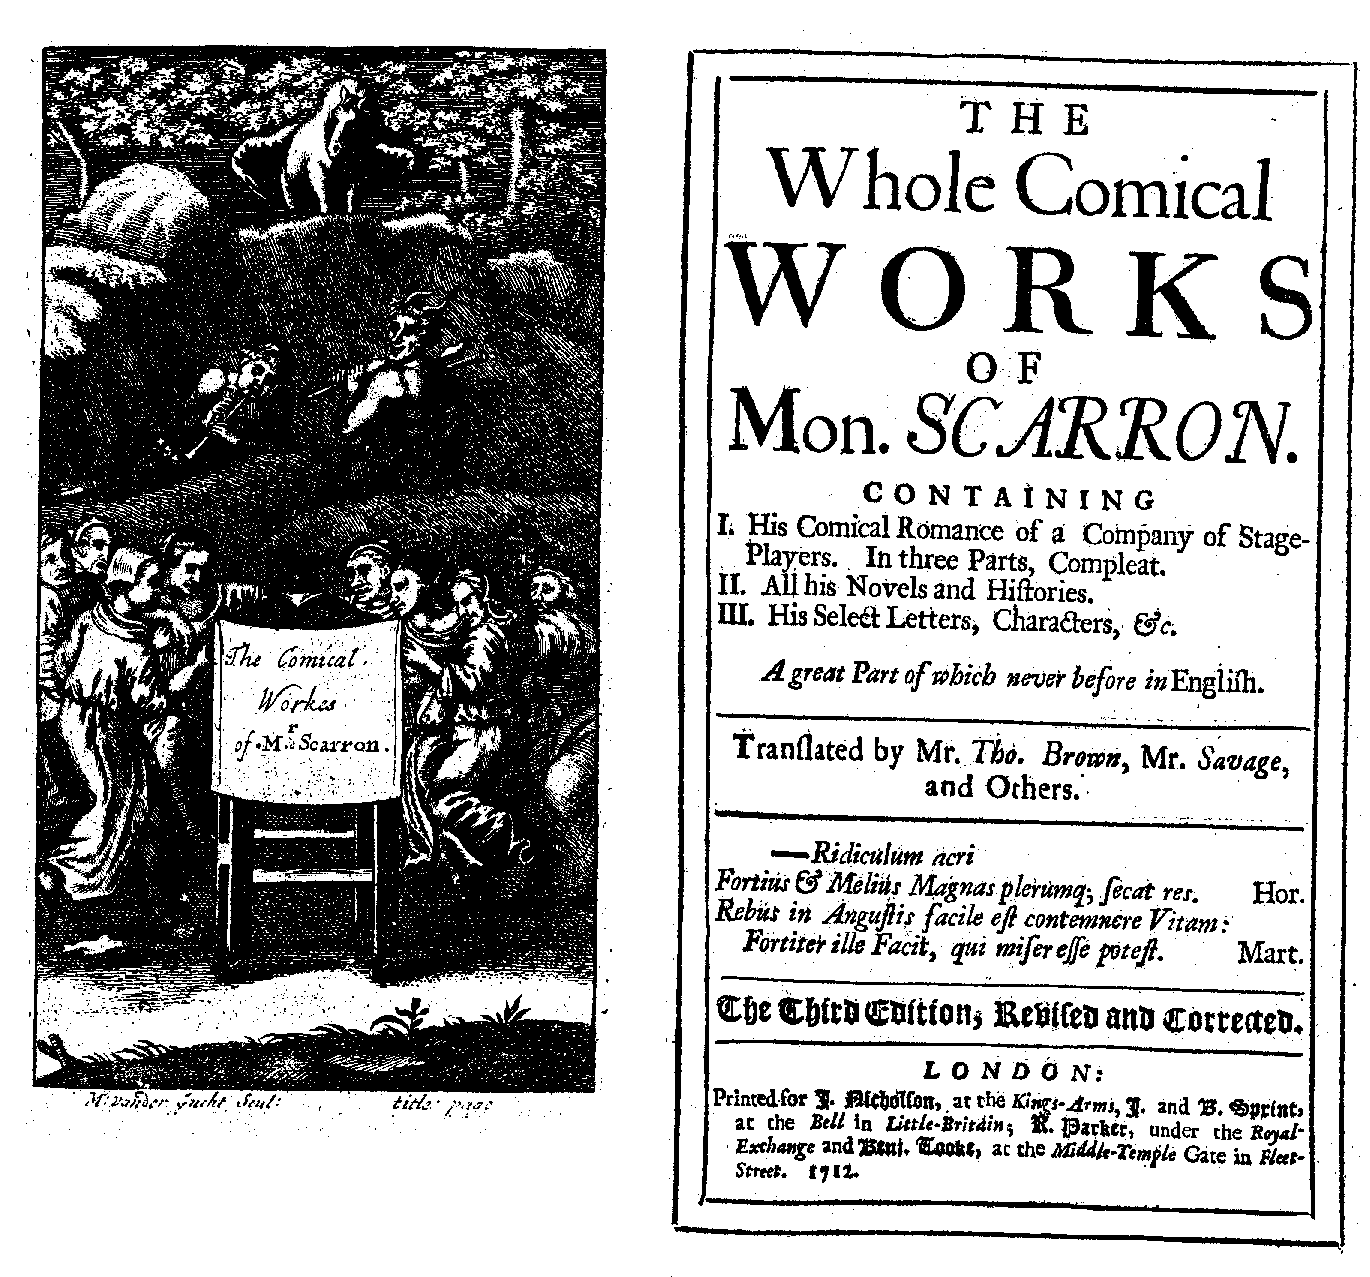 The Whole Comical Works of Monsr. Scarron (London: J. Nicholson/ J. & B. Sprint/ R. Parker/ B. Tooke, 1712).